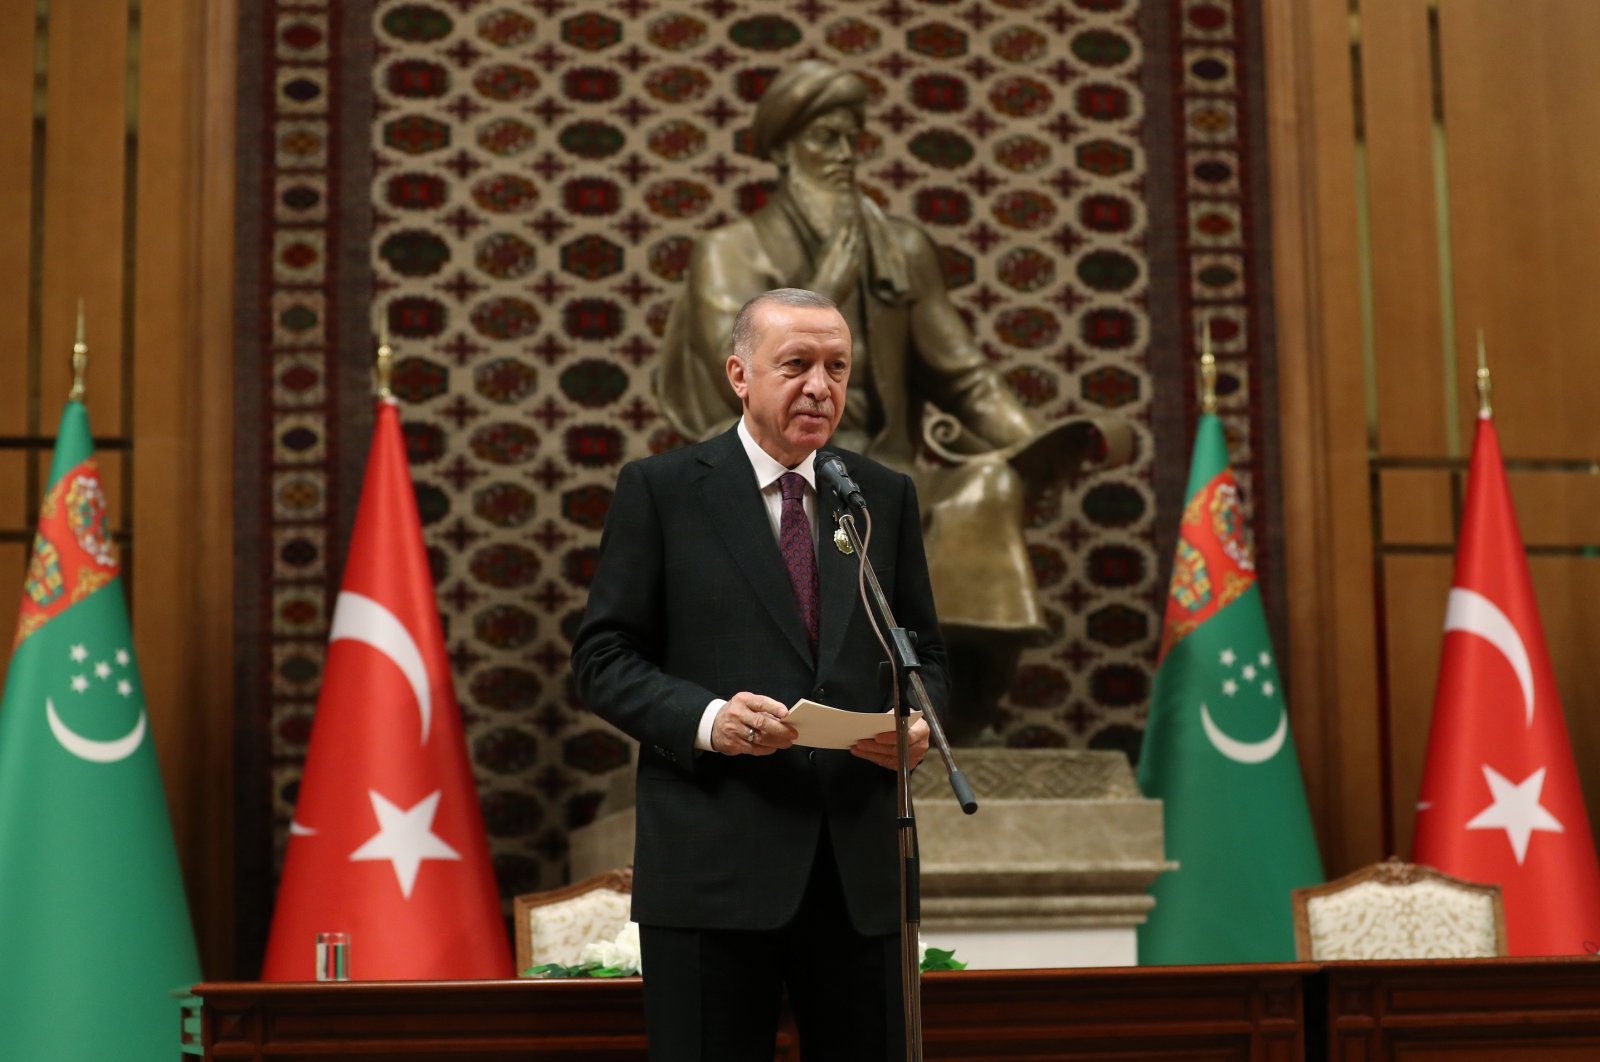 President Recep Tayyip Erdoğan receiving the Turkmenistan State Cooperation Order in Ashkabat, Turkmenistan, Nov. 27, 2021 (IHA Photo)